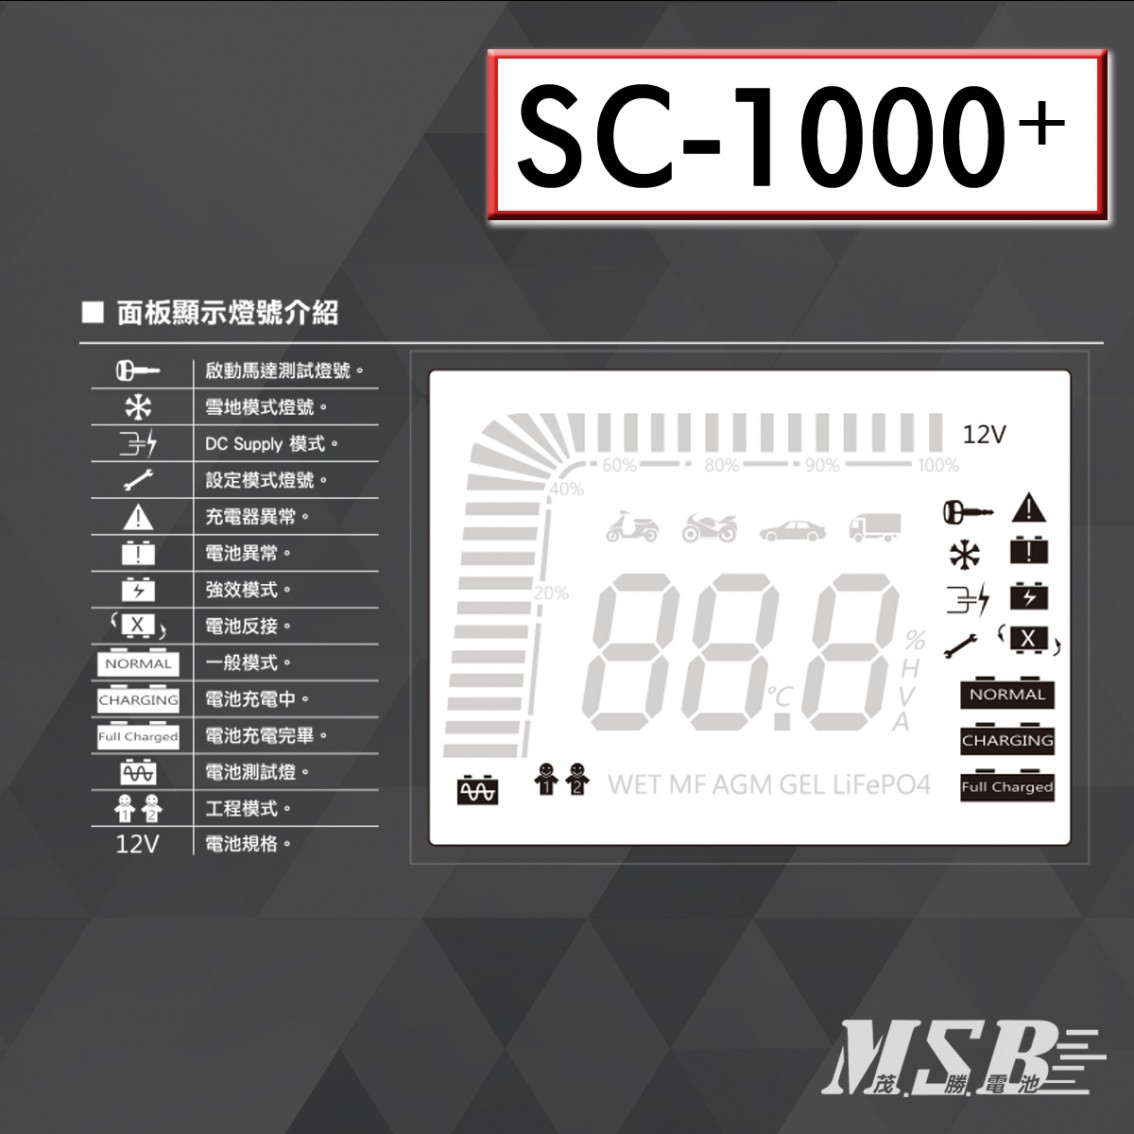 SC-1000+